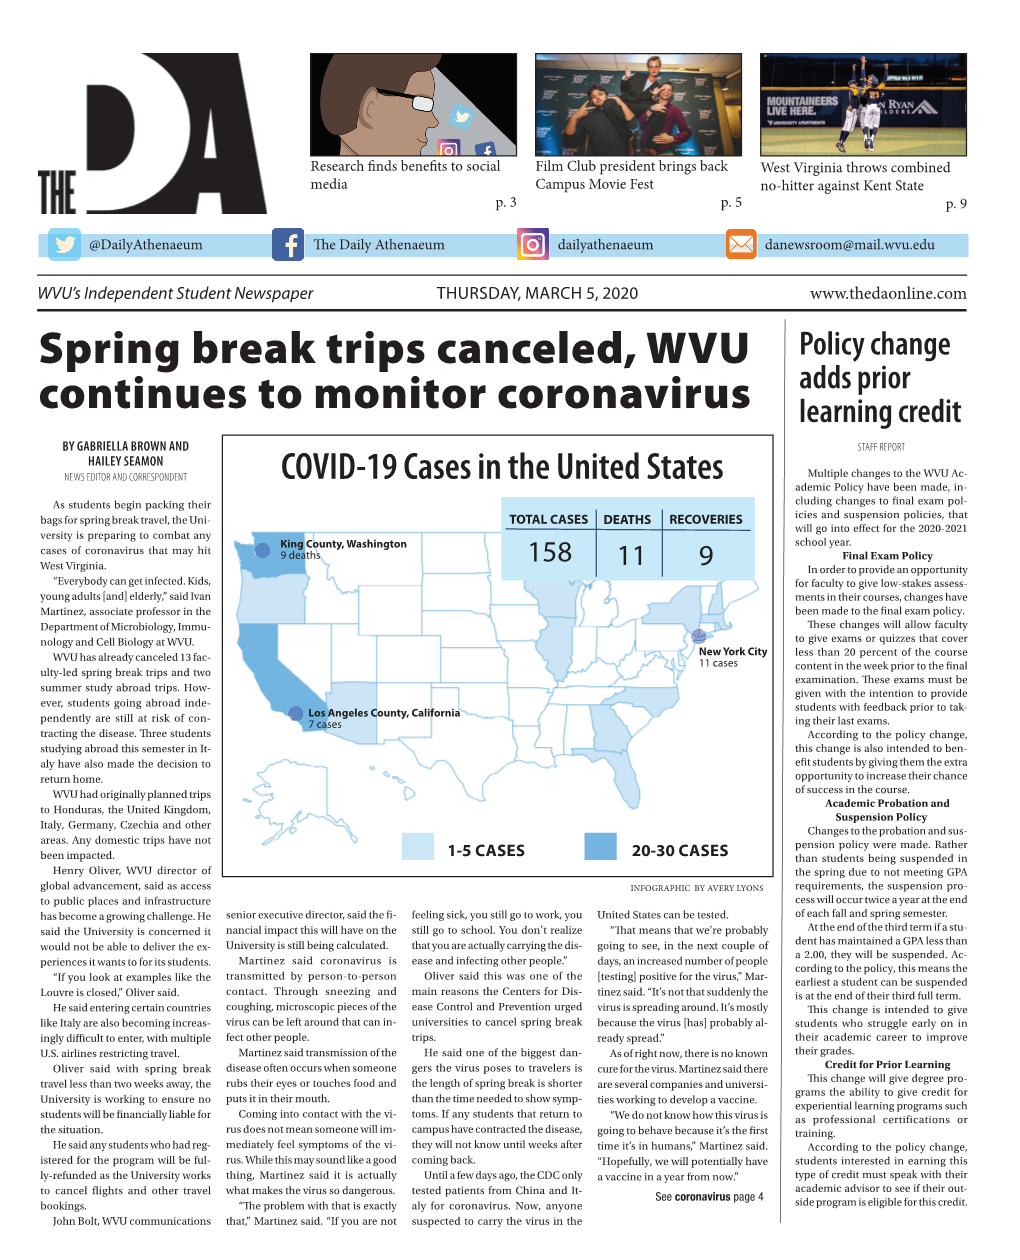 Spring Break Trips Canceled, WVU Continues to Monitor Coronavirus